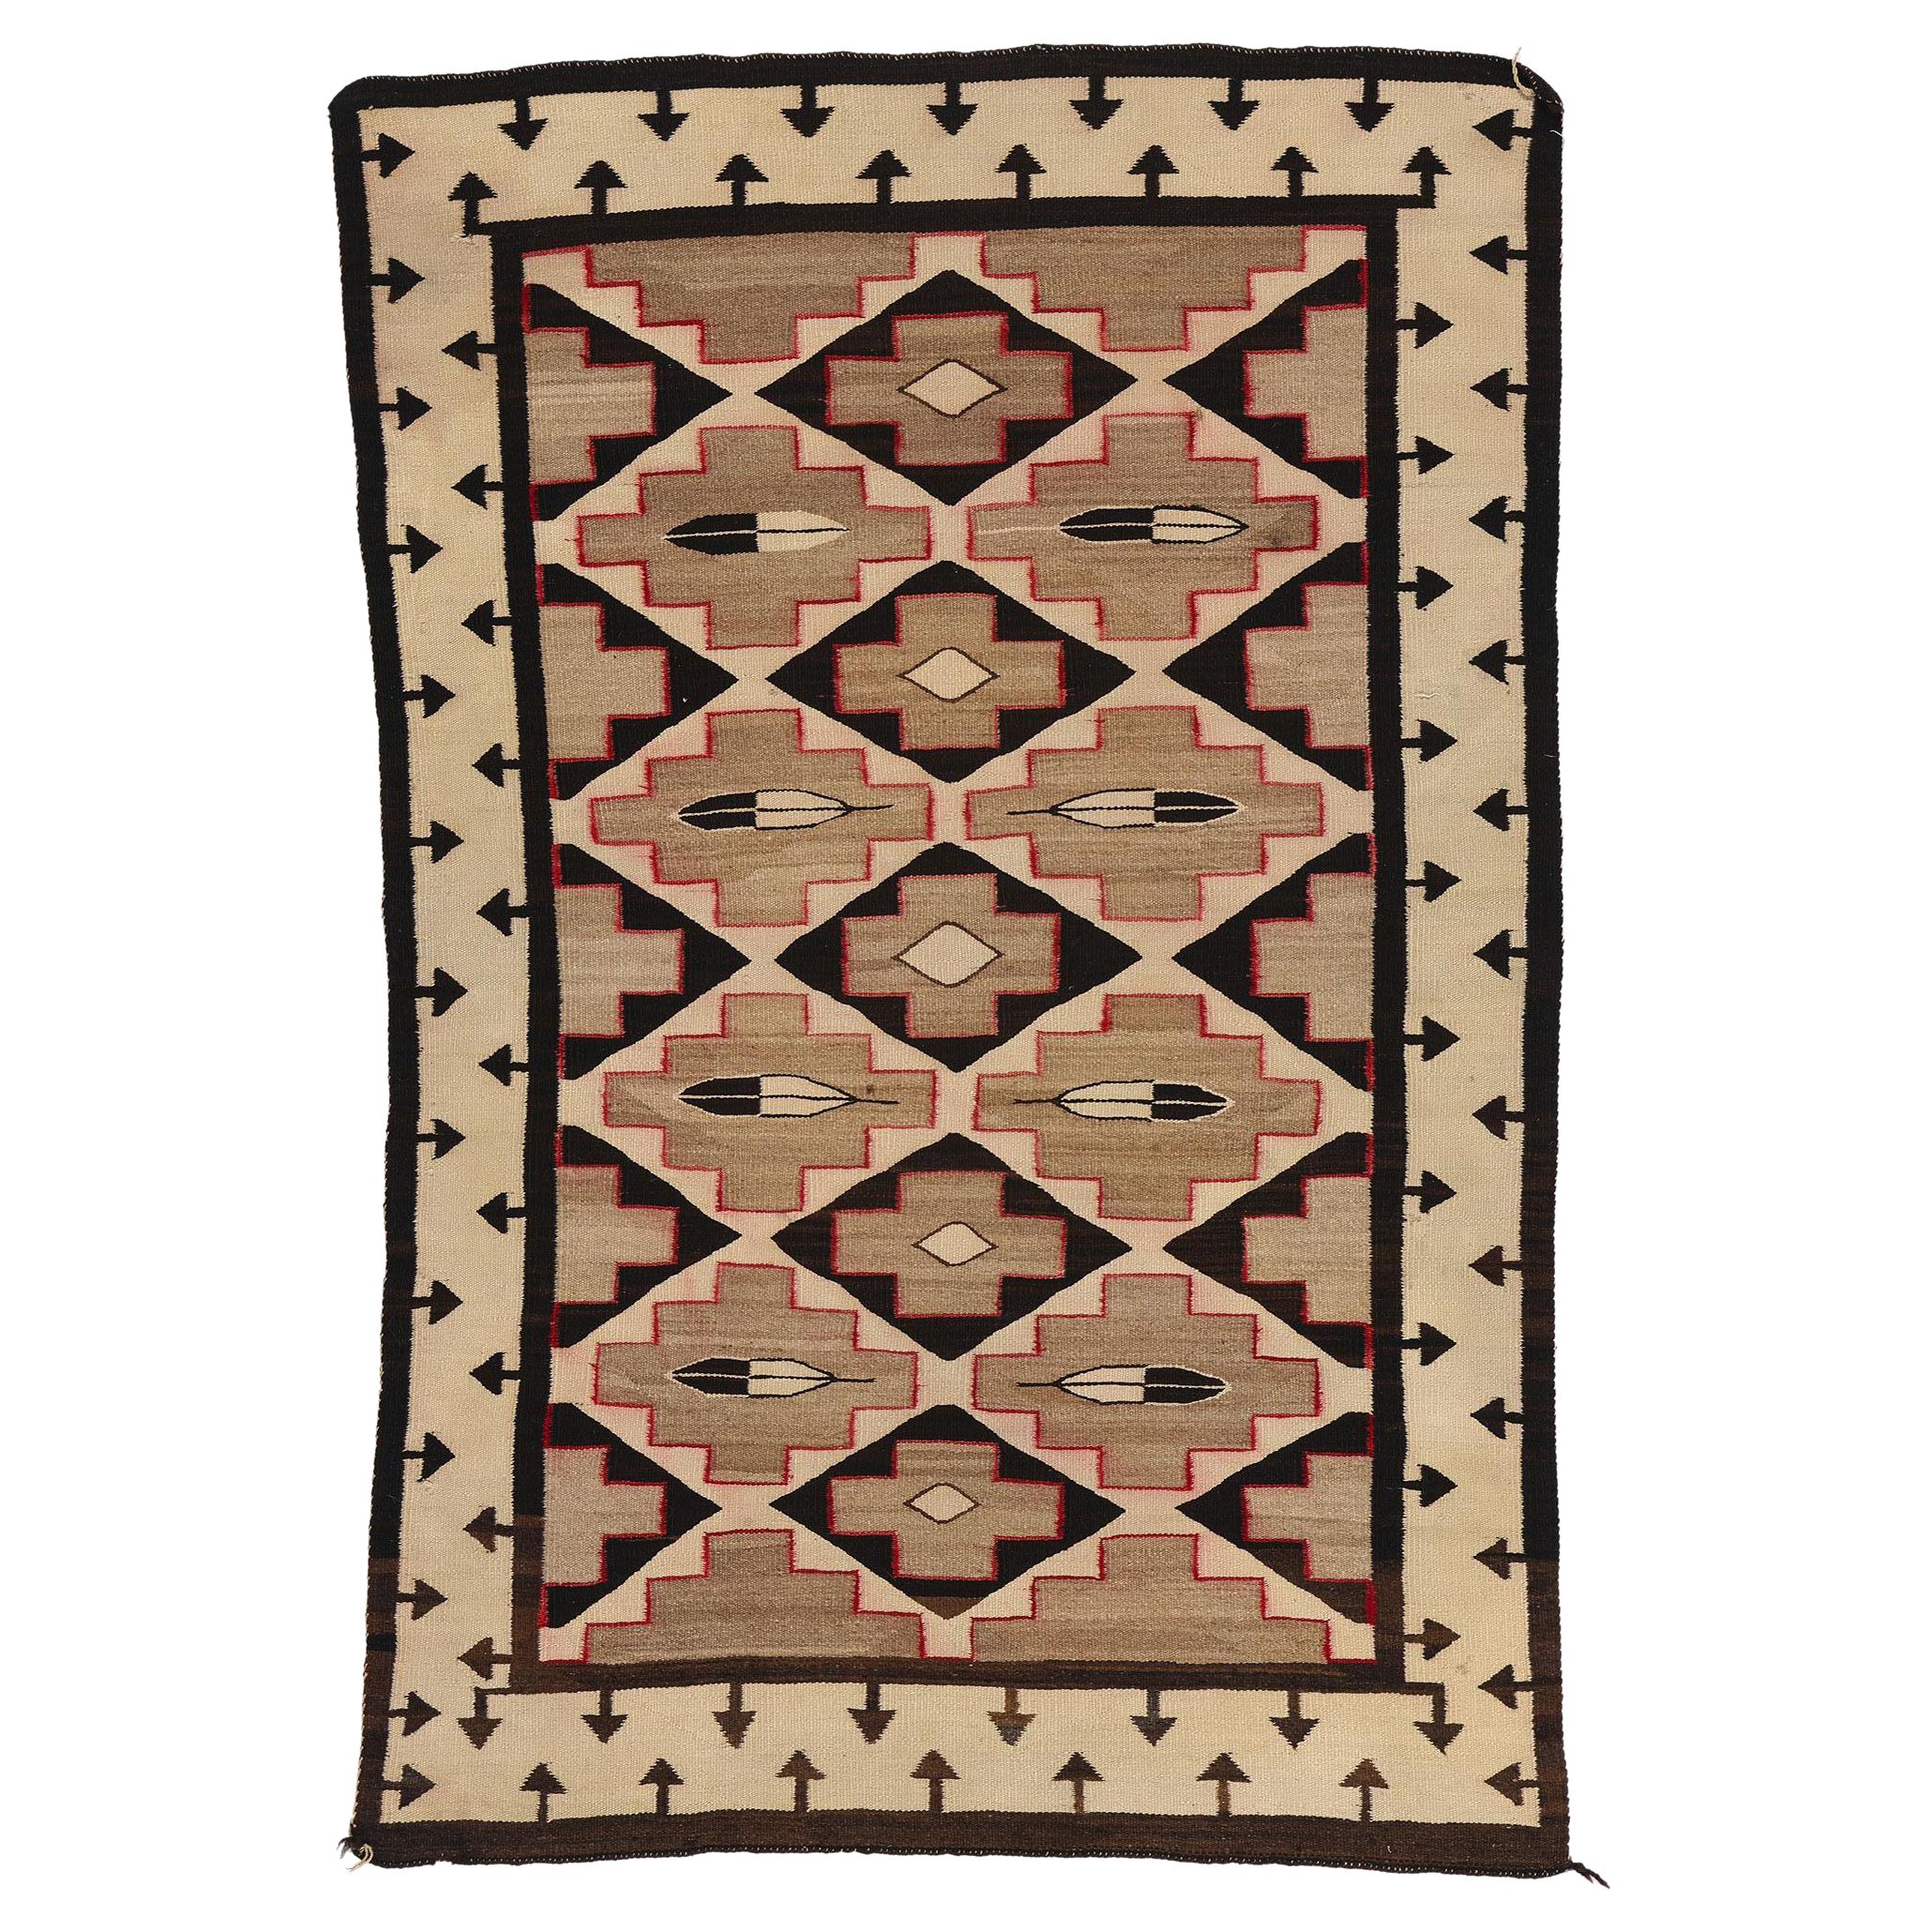 1920er Jahre Antike Kristall Navajo Decke Teppich Native American Textil